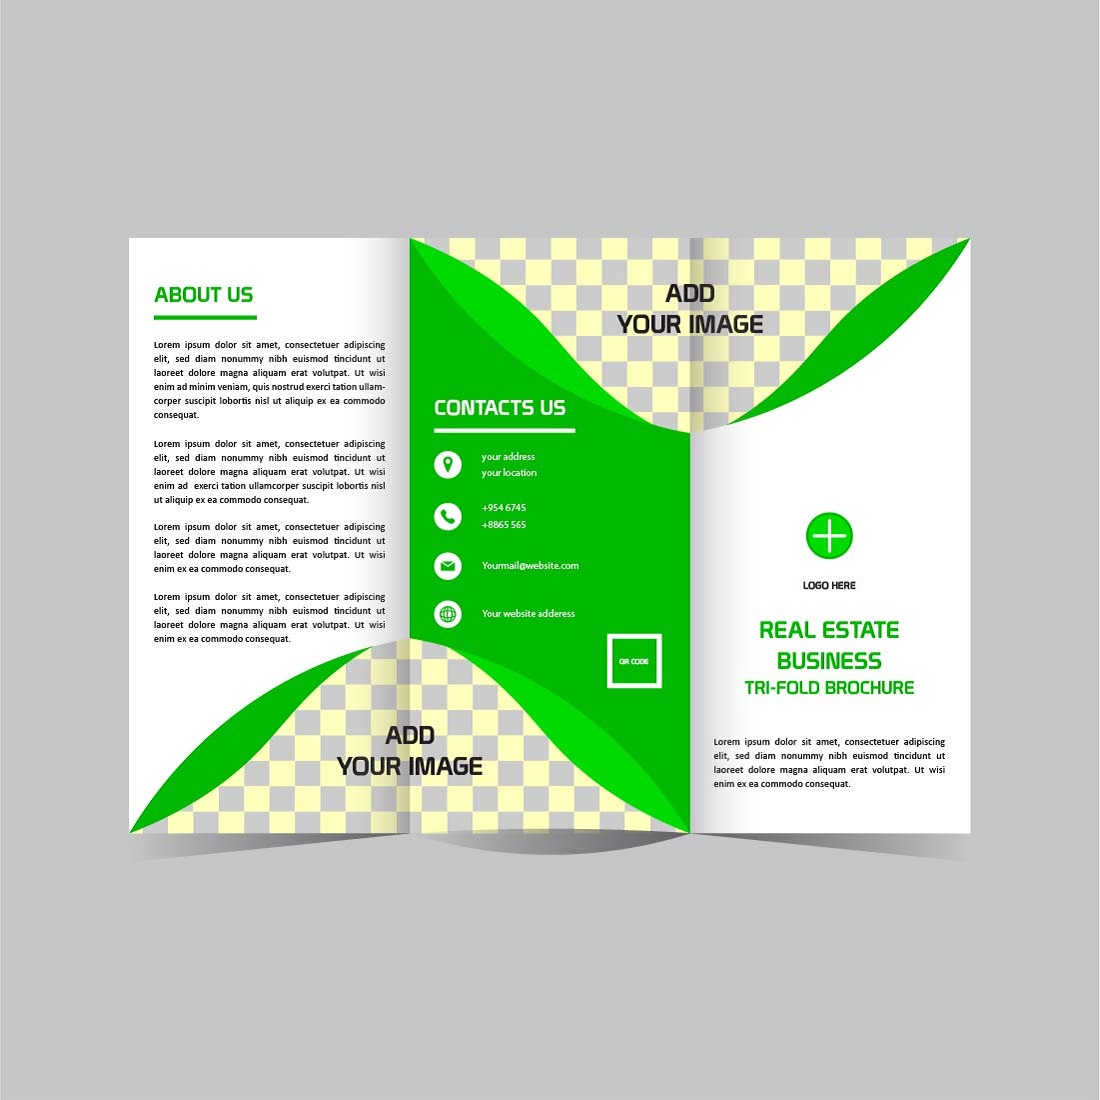 Modern Tri fold real estate brochure design template editable resizable preview image.